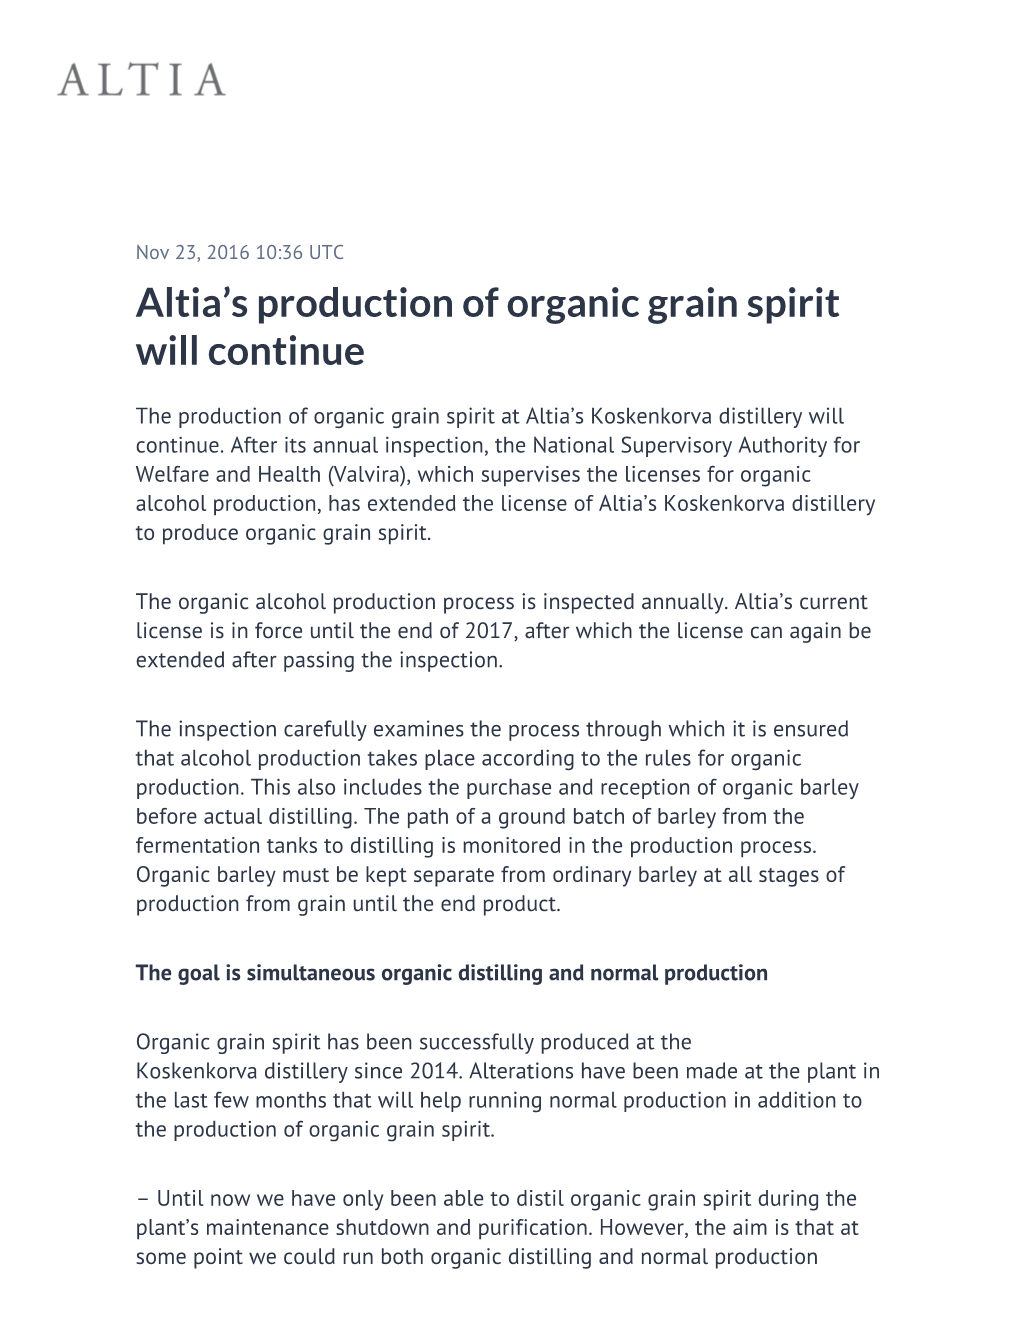 Altia's Production of Organic Grain Spirit Will Continue